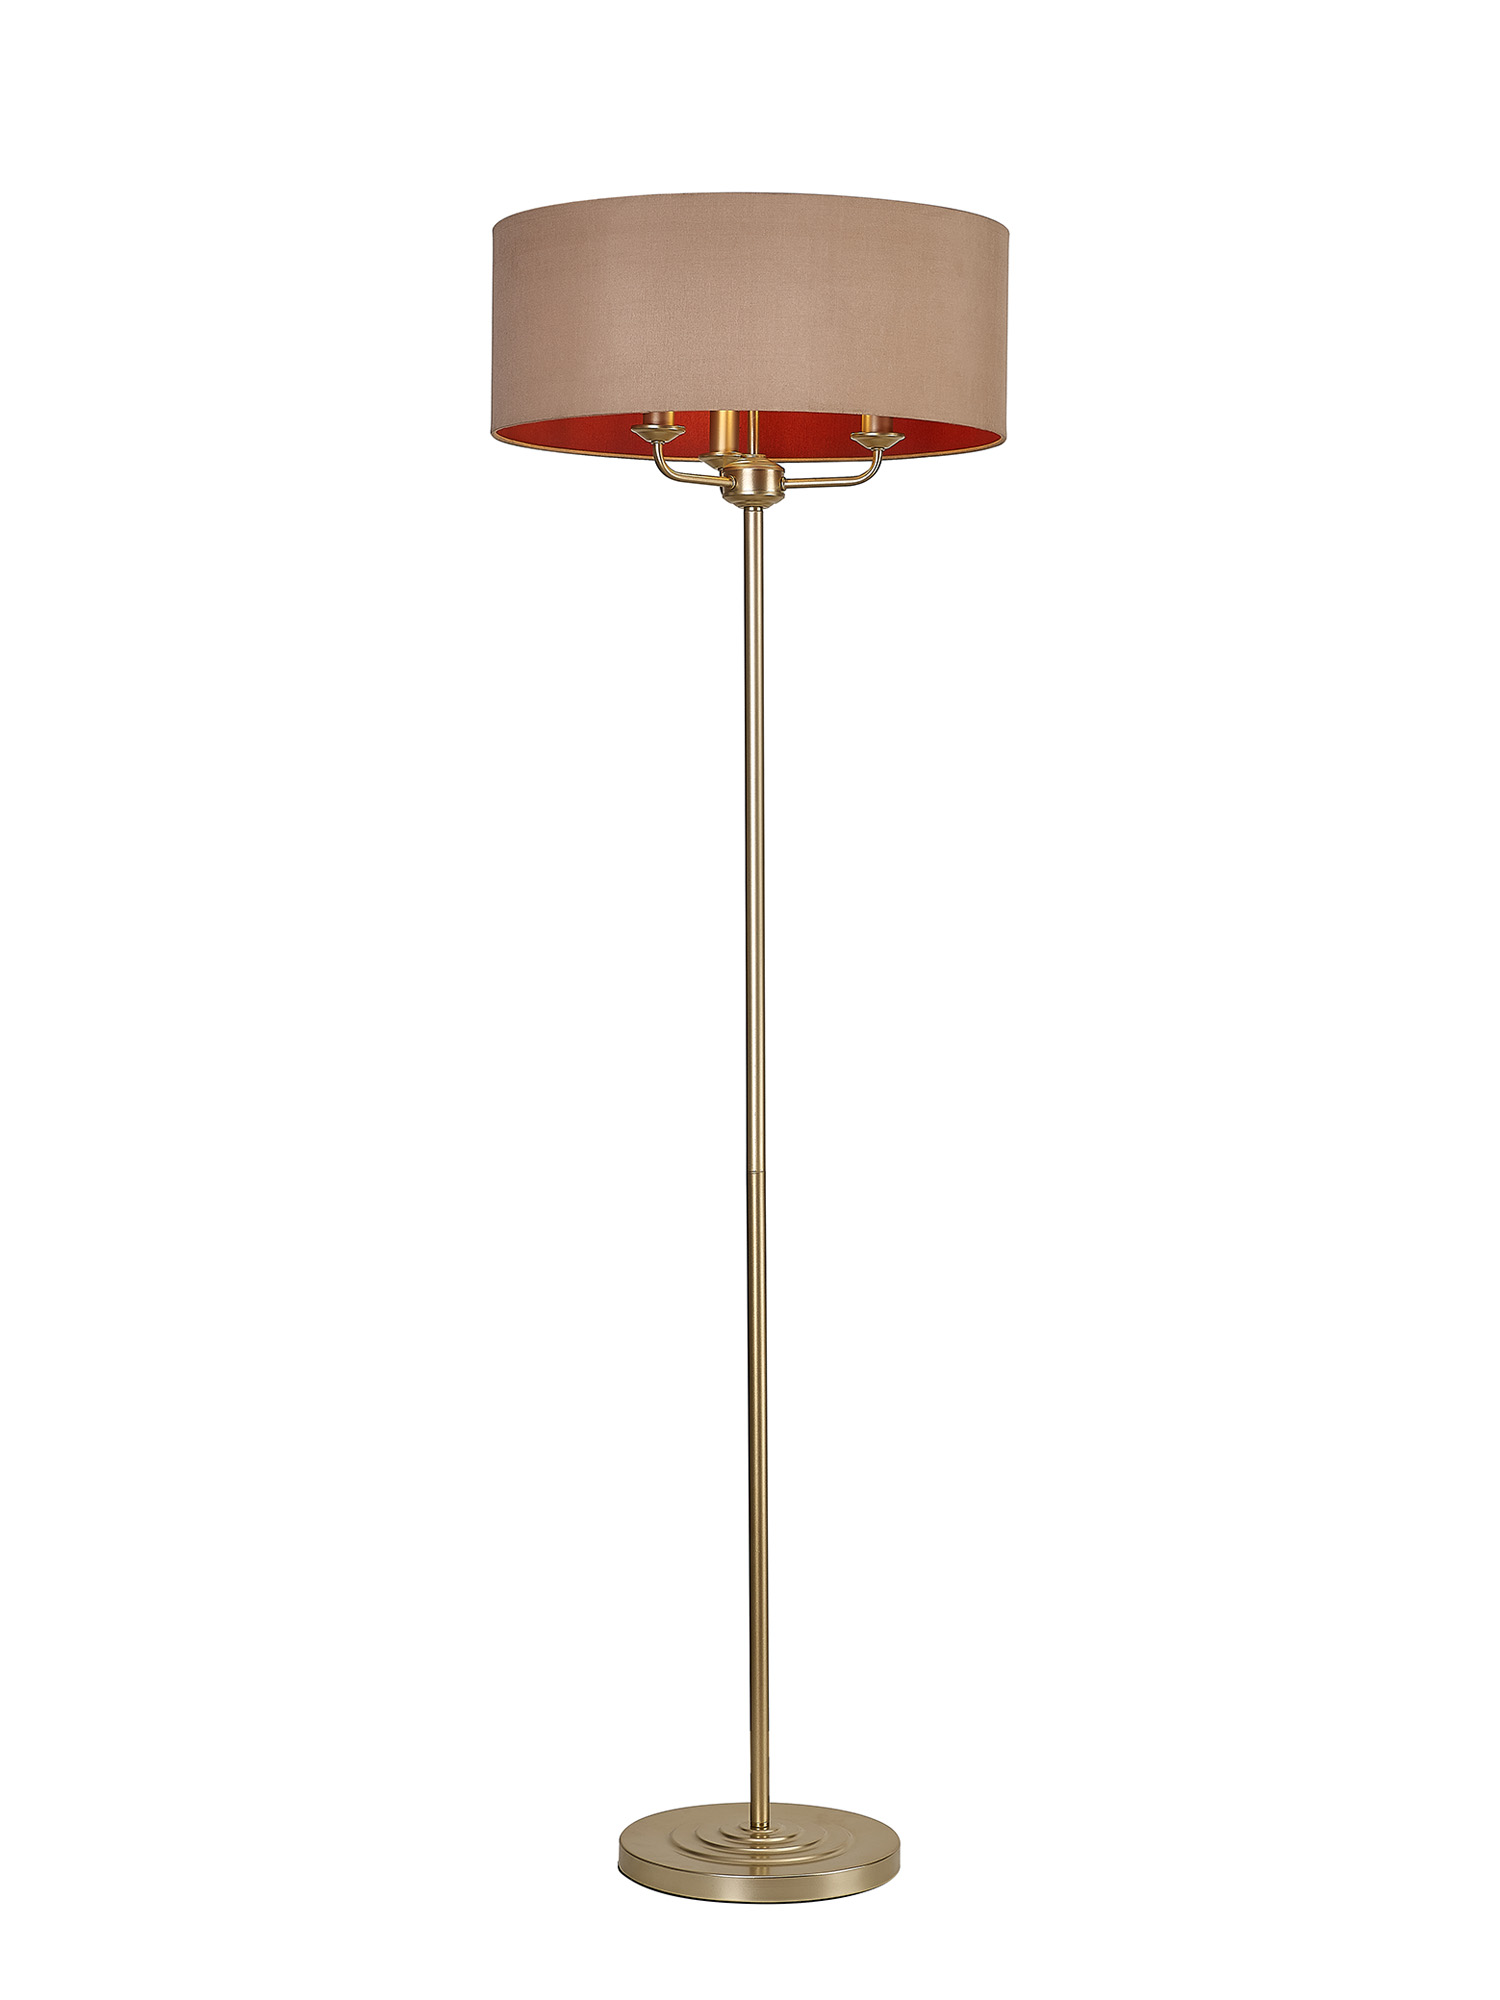 DK0997  Banyan 45cm 3 Light Floor Lamp Champagne Gold, Antique Gold